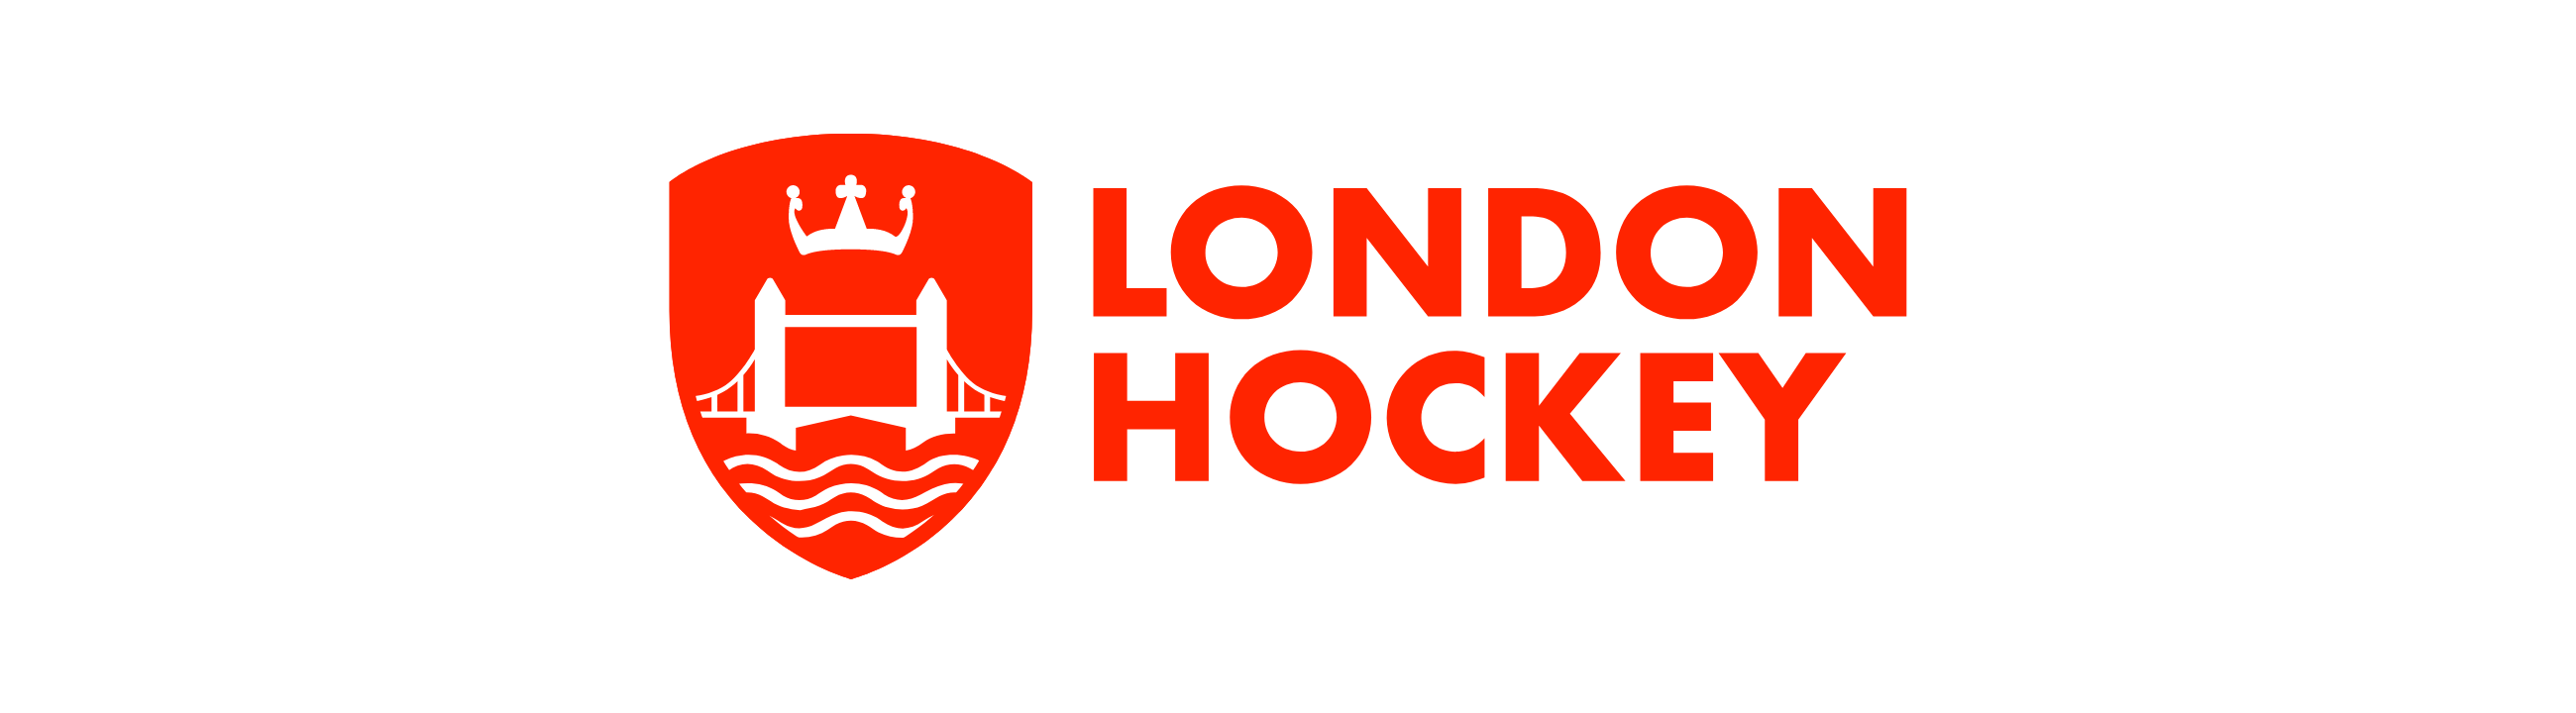 London Hockey Clothing